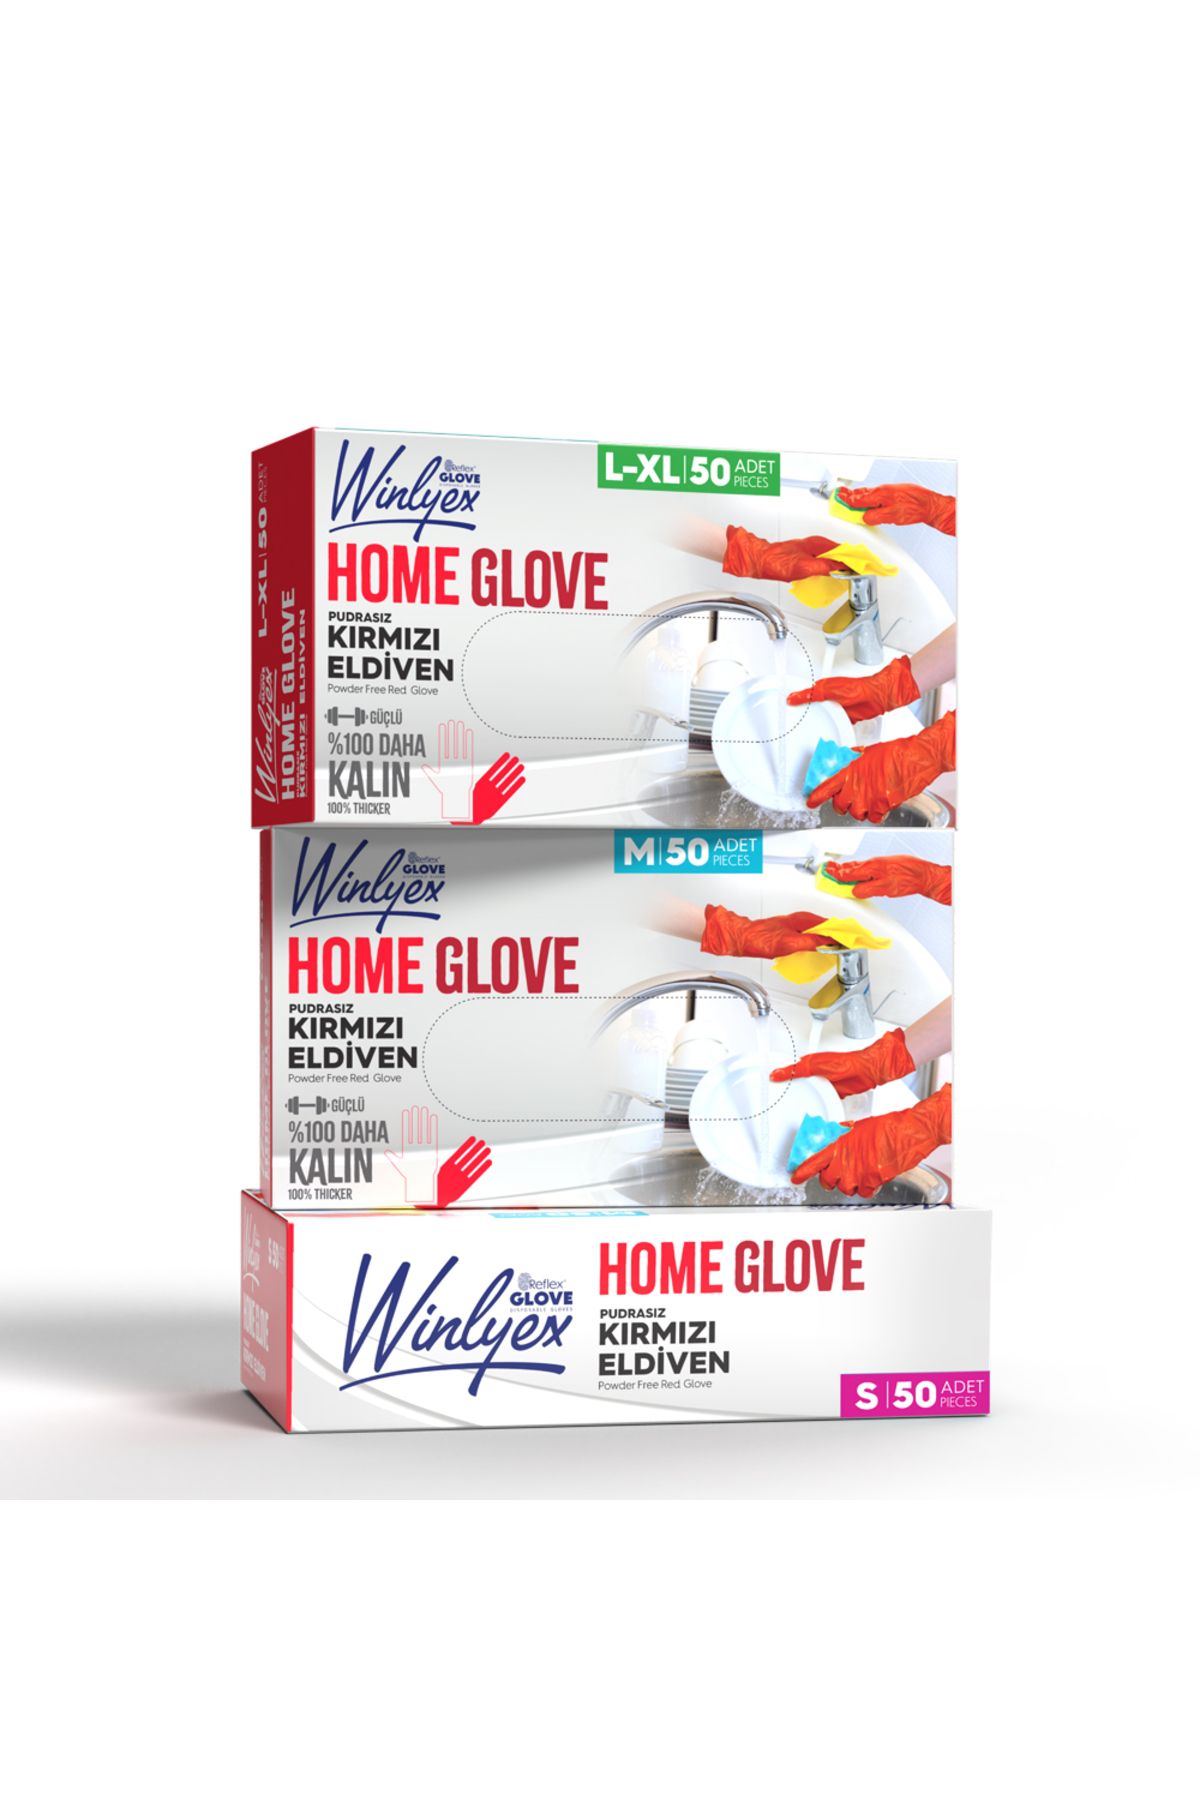 Reflex Winlyex Home Glove Pudrasız Kırmızı Eldiven L/XL Beden